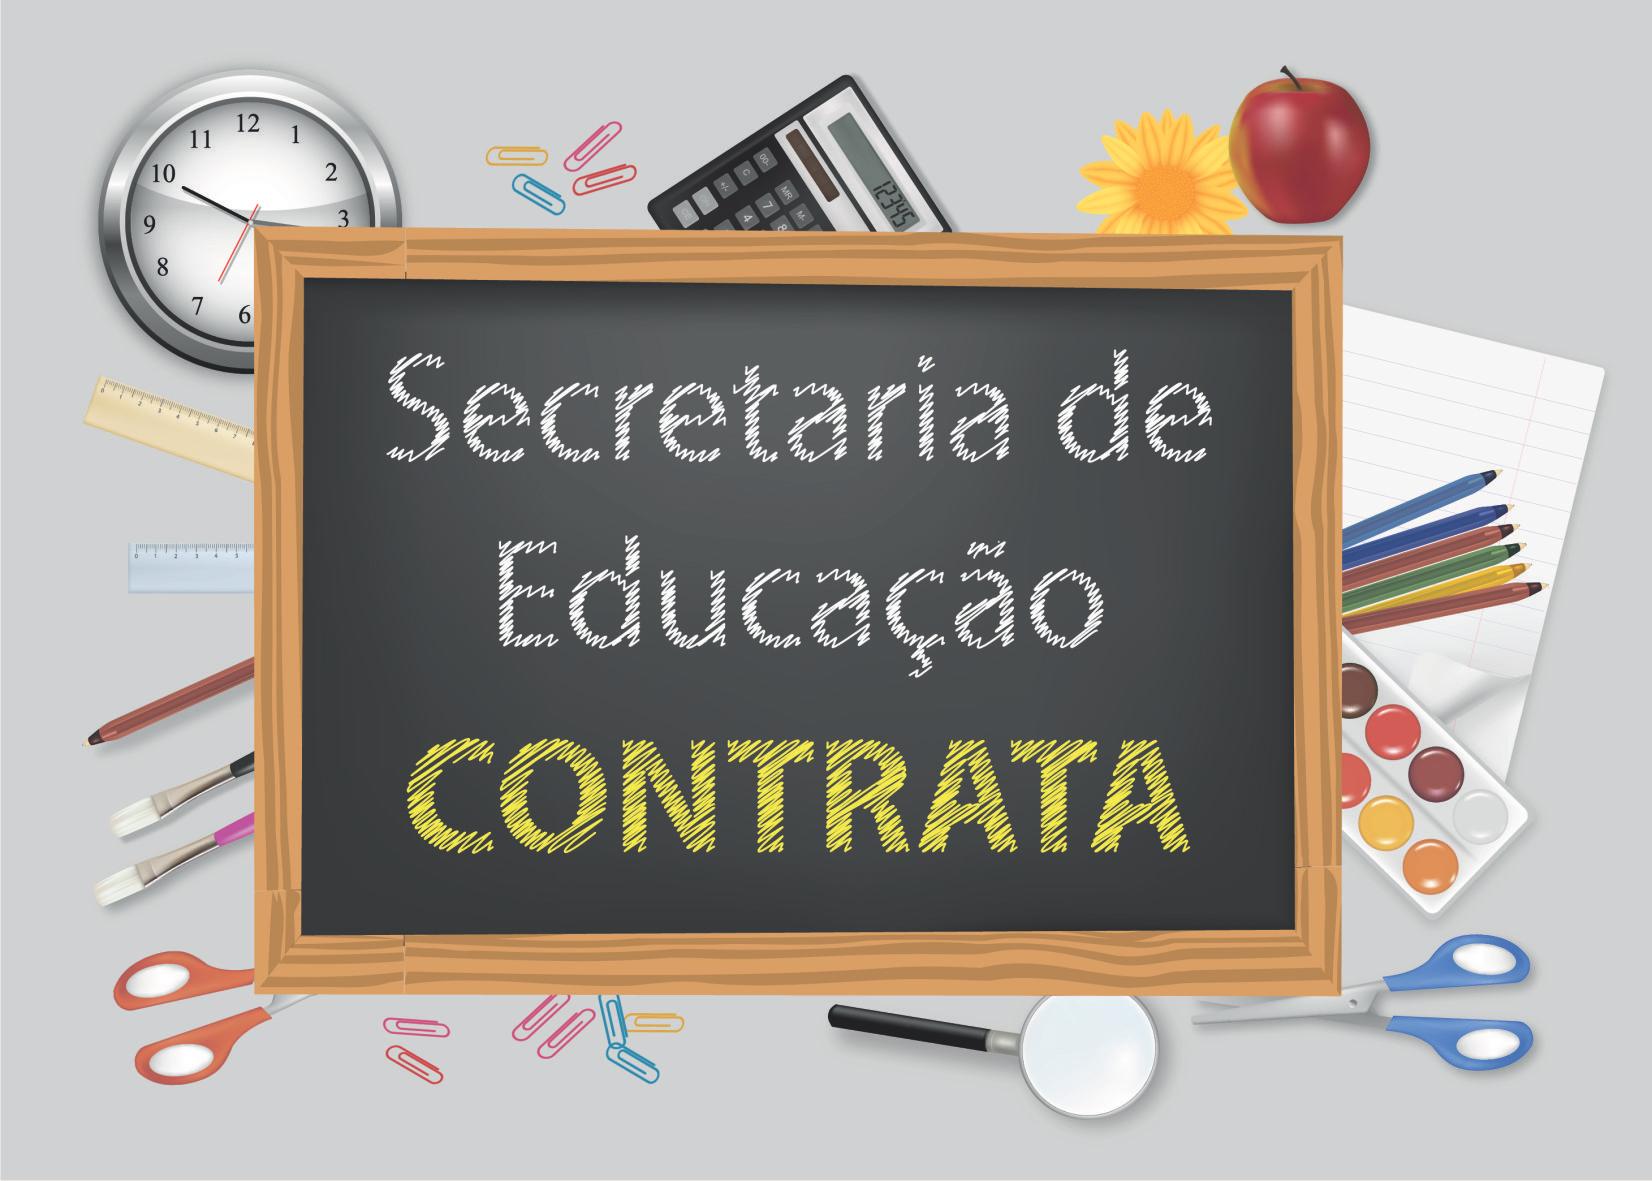 EDUCAÇAO-CONTRATA.jpg